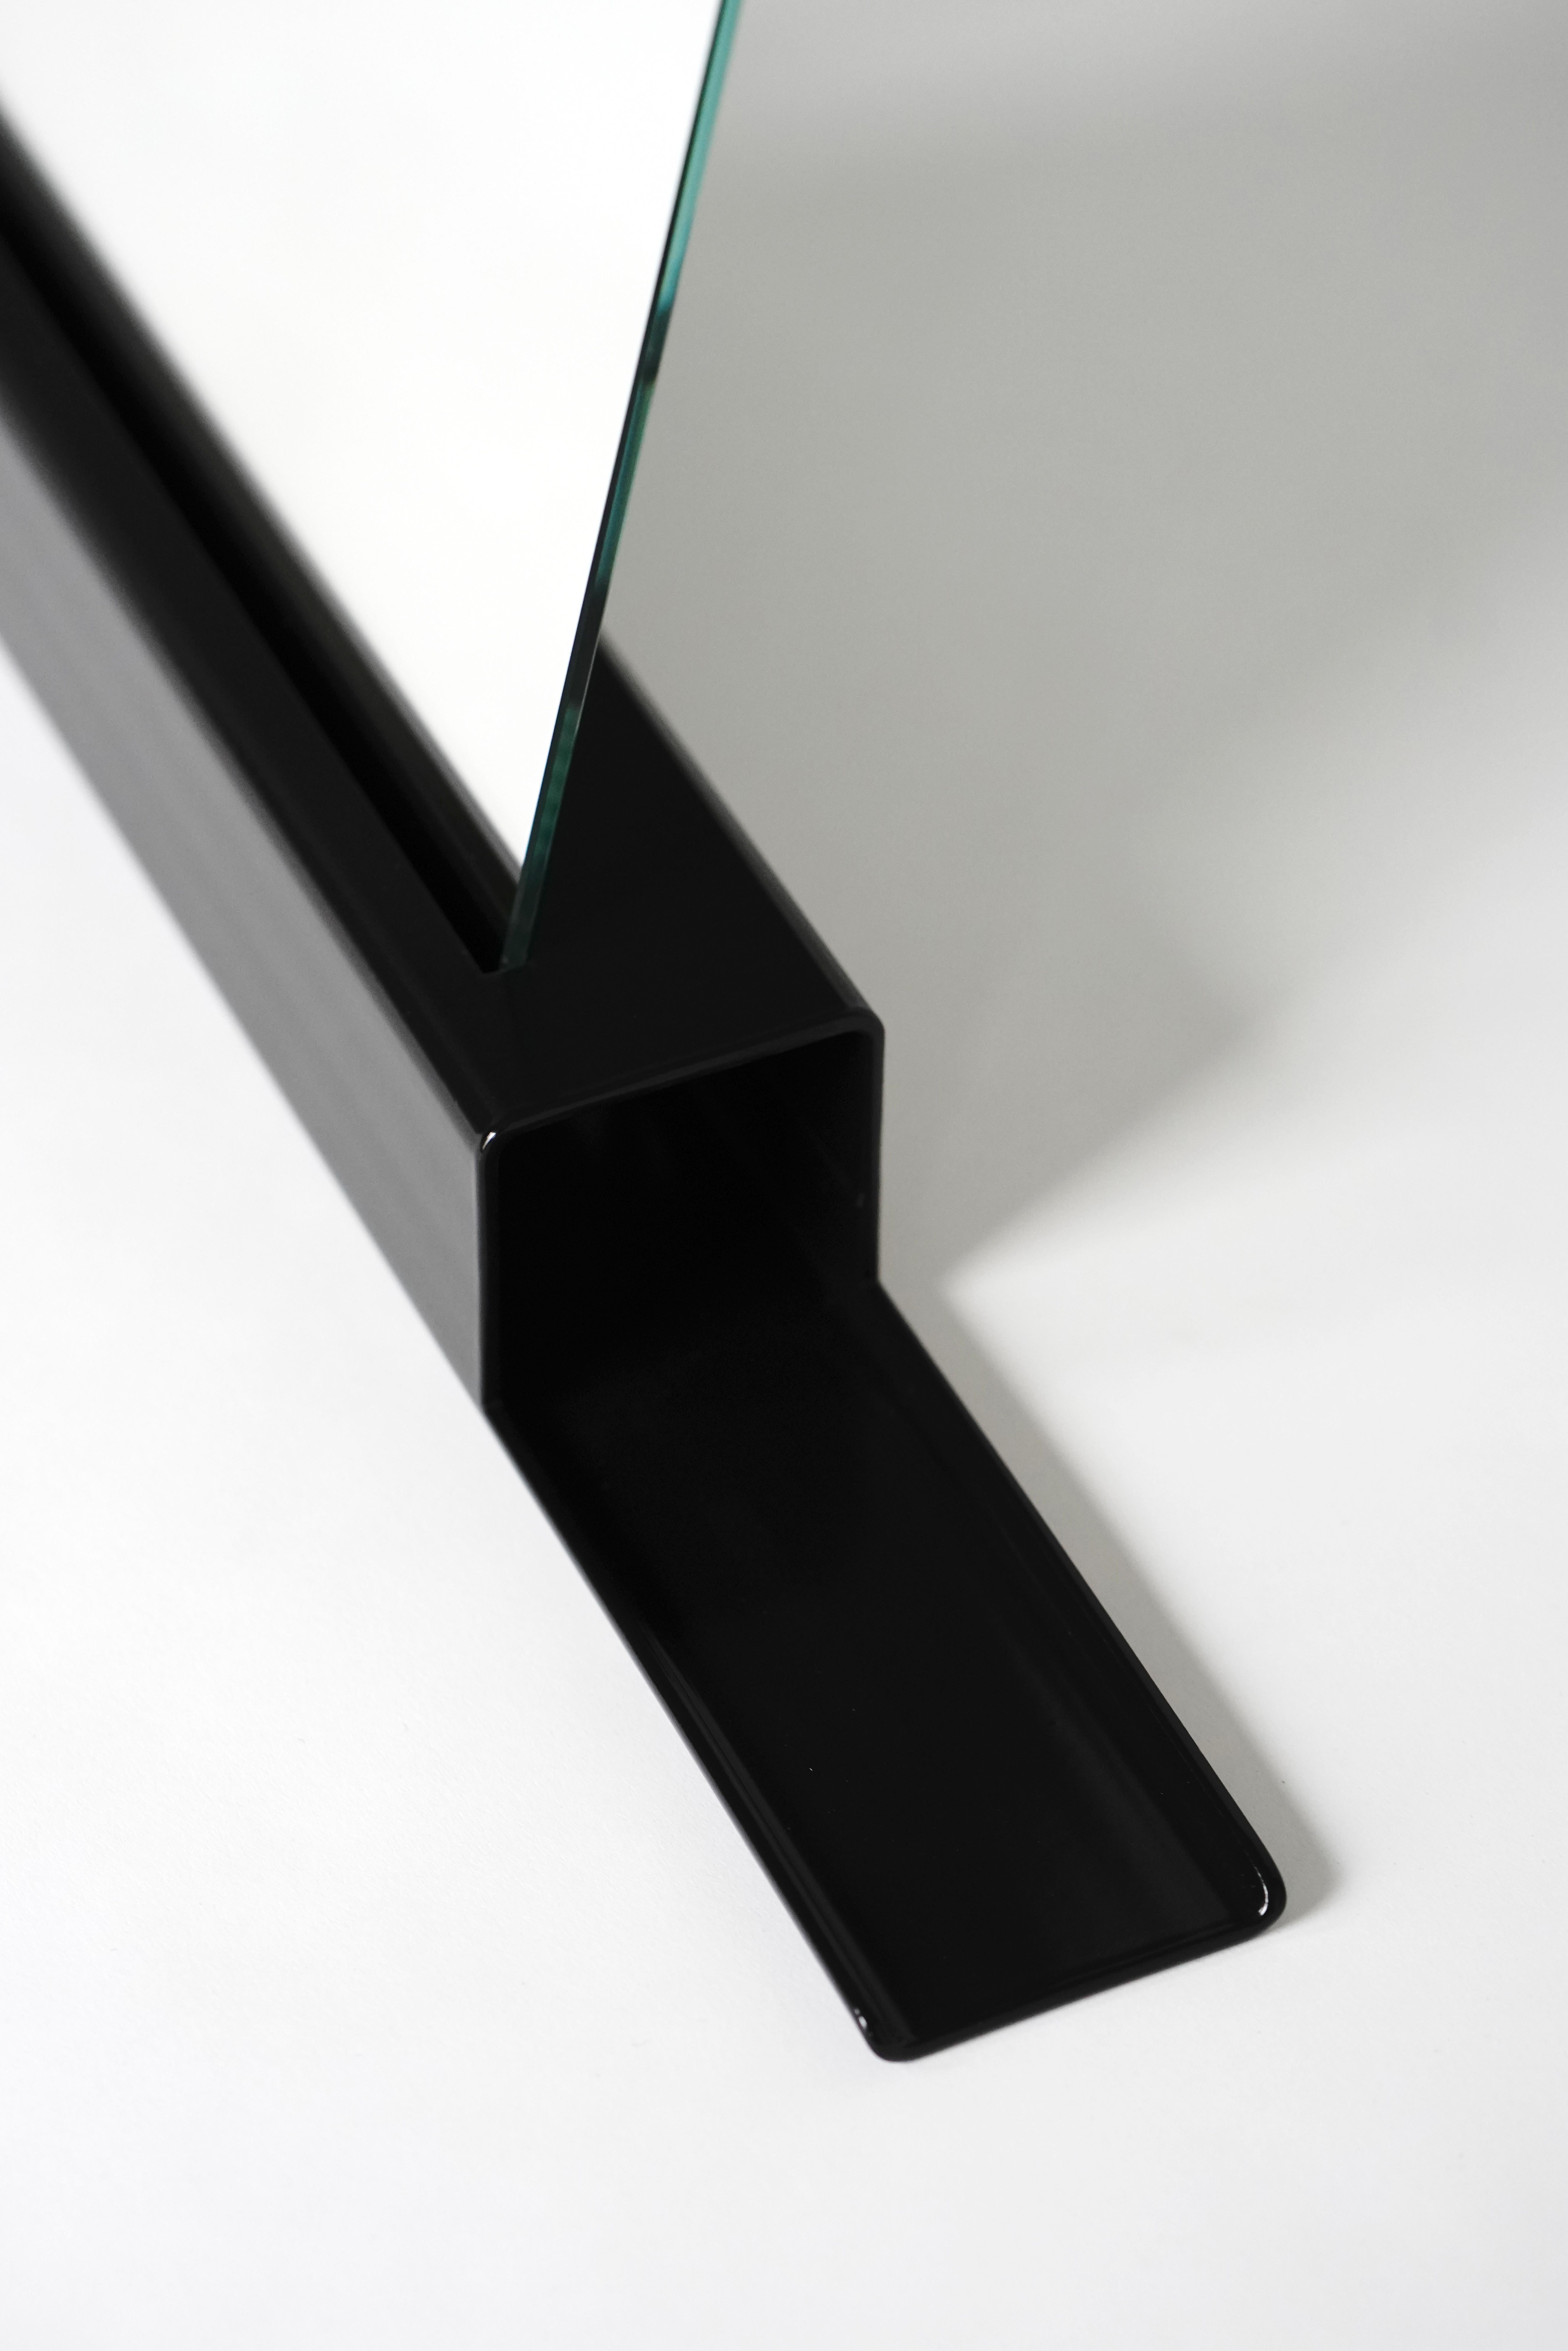 Contemporary Modern Dutch Design, Mirror One Medium Plateau Right / Black For Sale